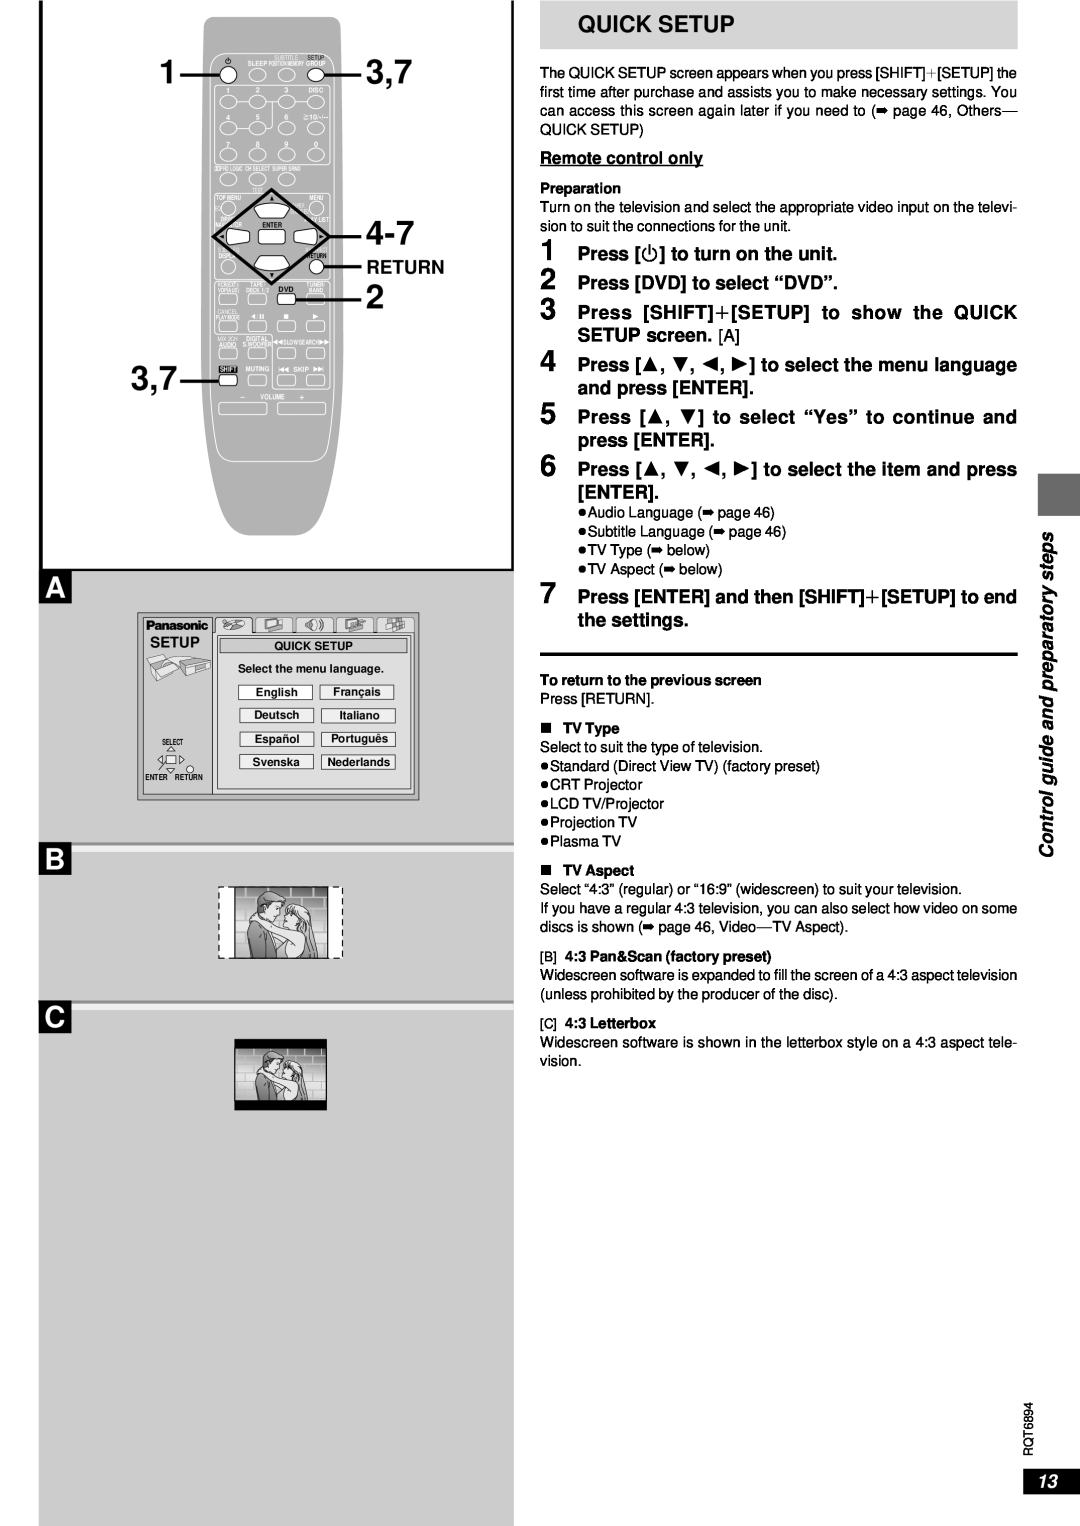 Technics SC-DV290 Quick Setup, to turn on the unit, Press DVD to select “DVD”, Press SHIFTTSETUP to show the QUICK 